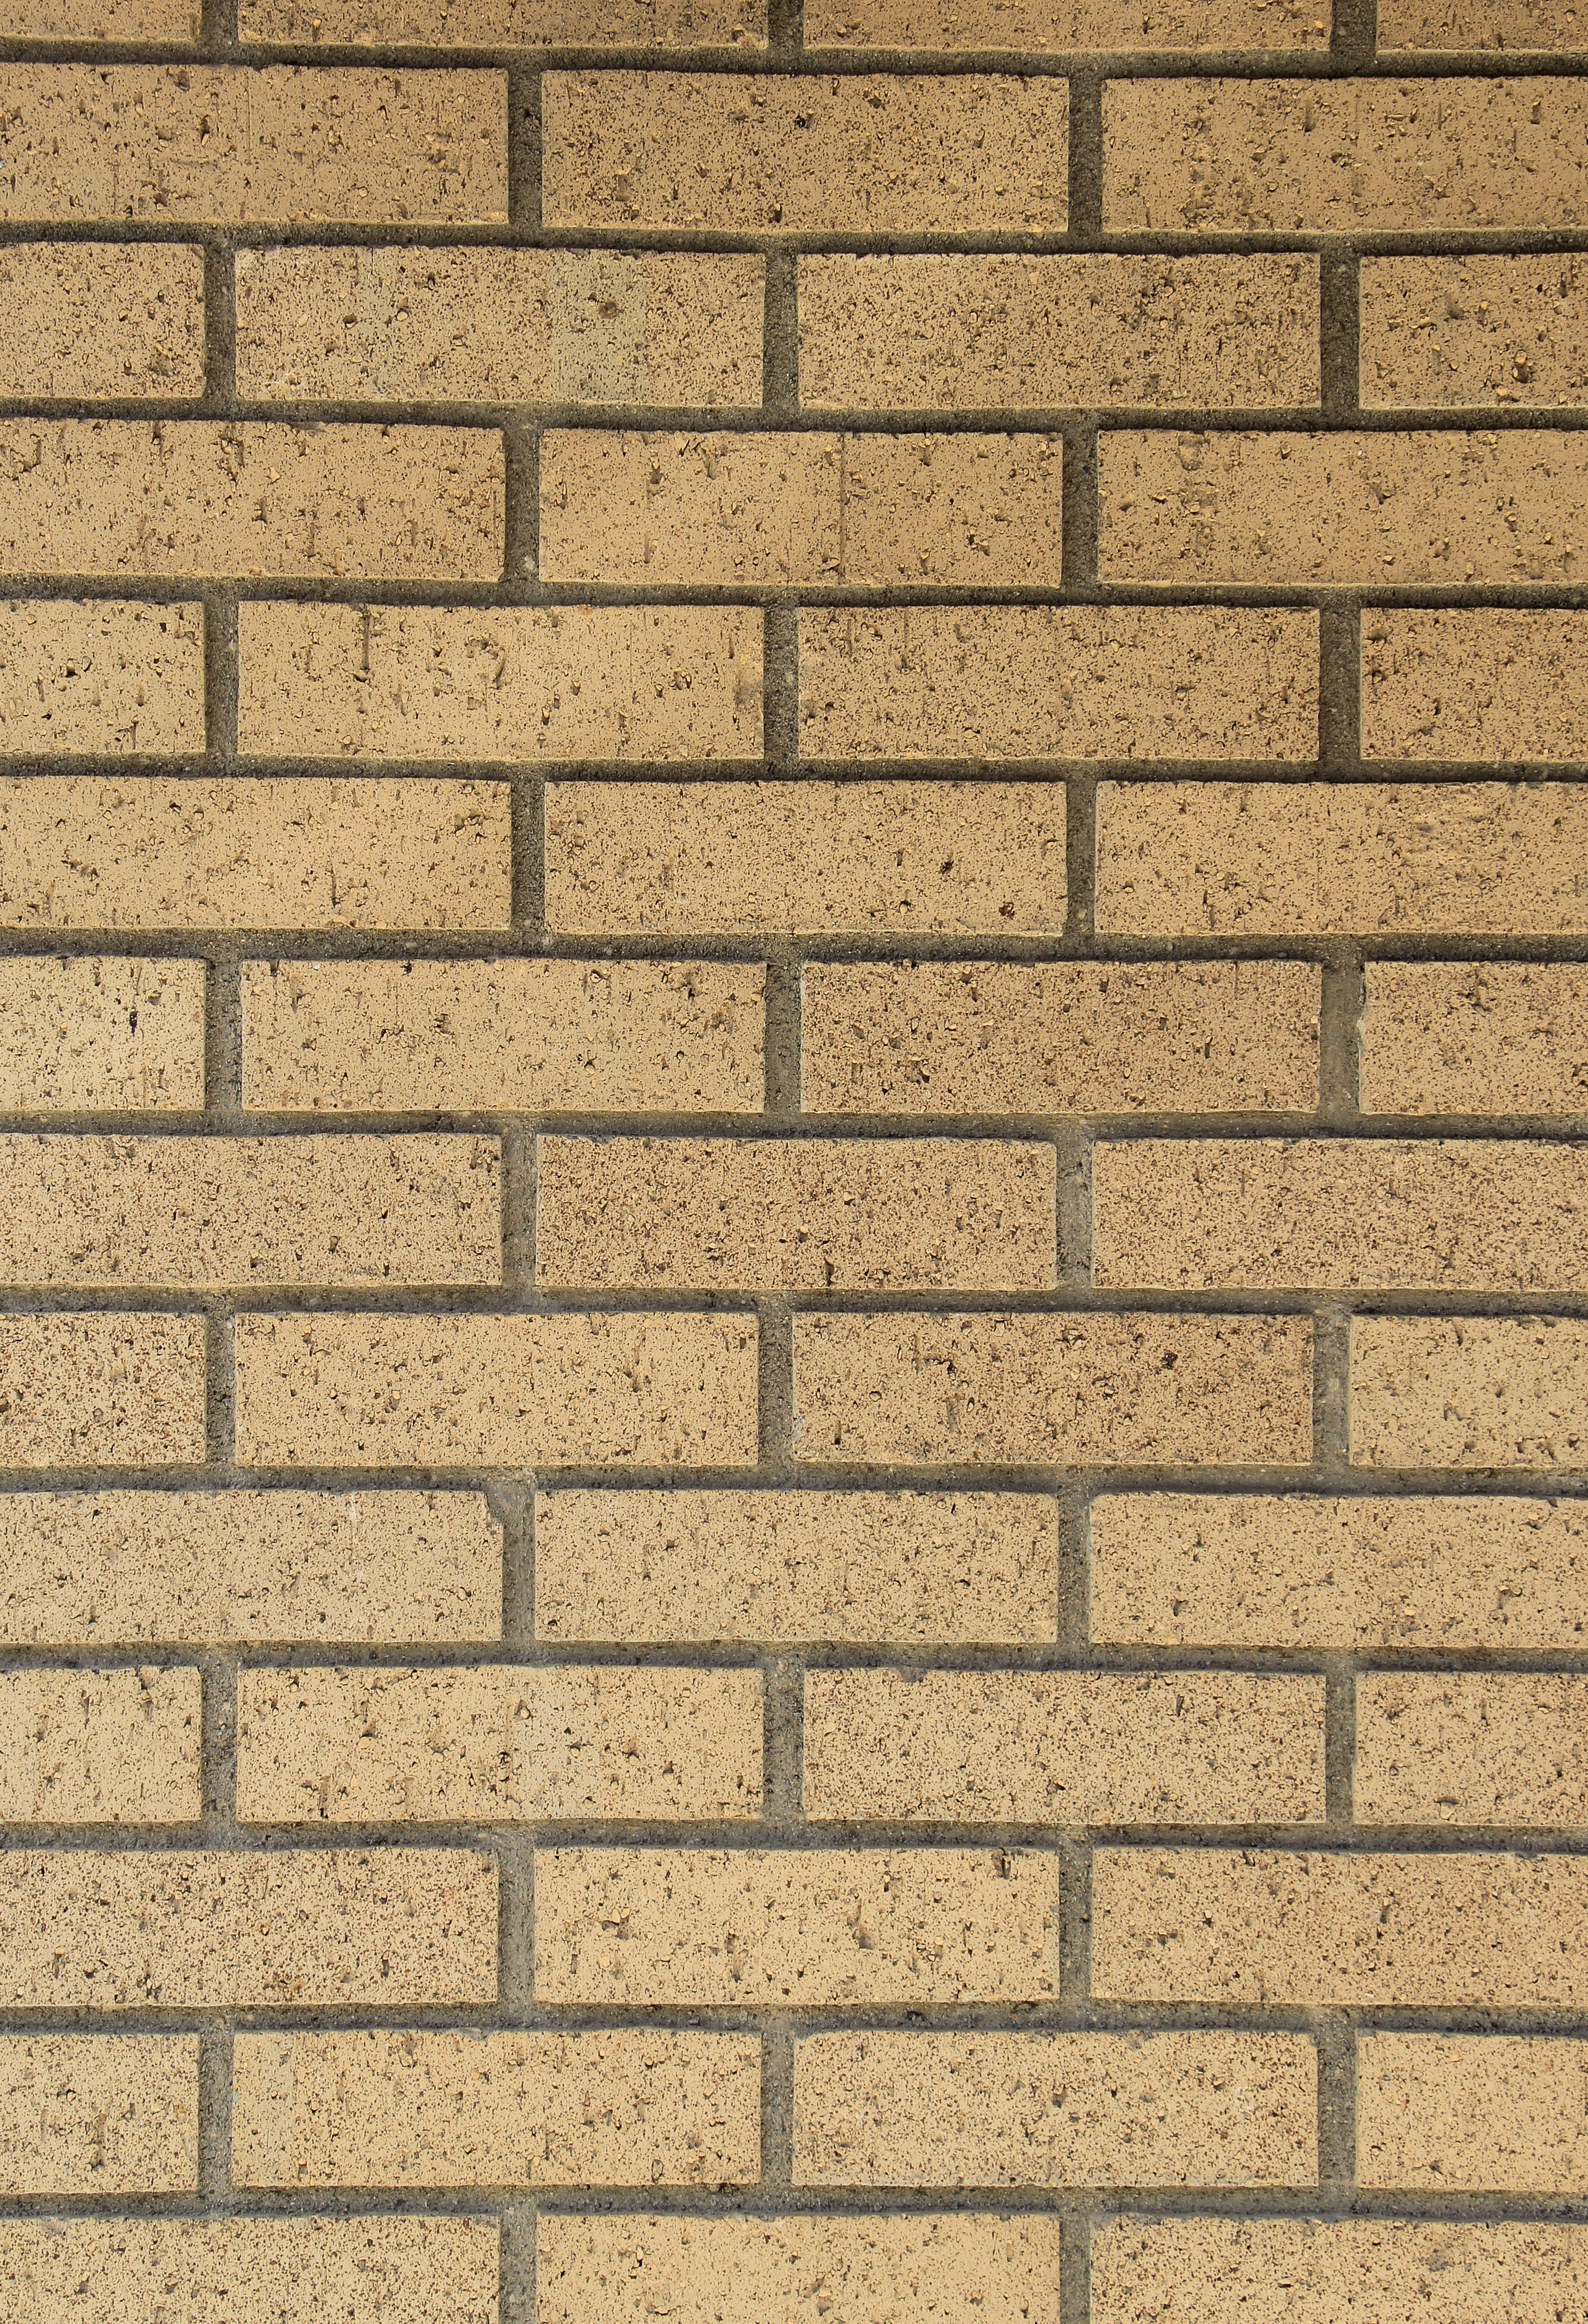 yellow brick wallpaper,brickwork,brick,wall,stone wall,bricklayer